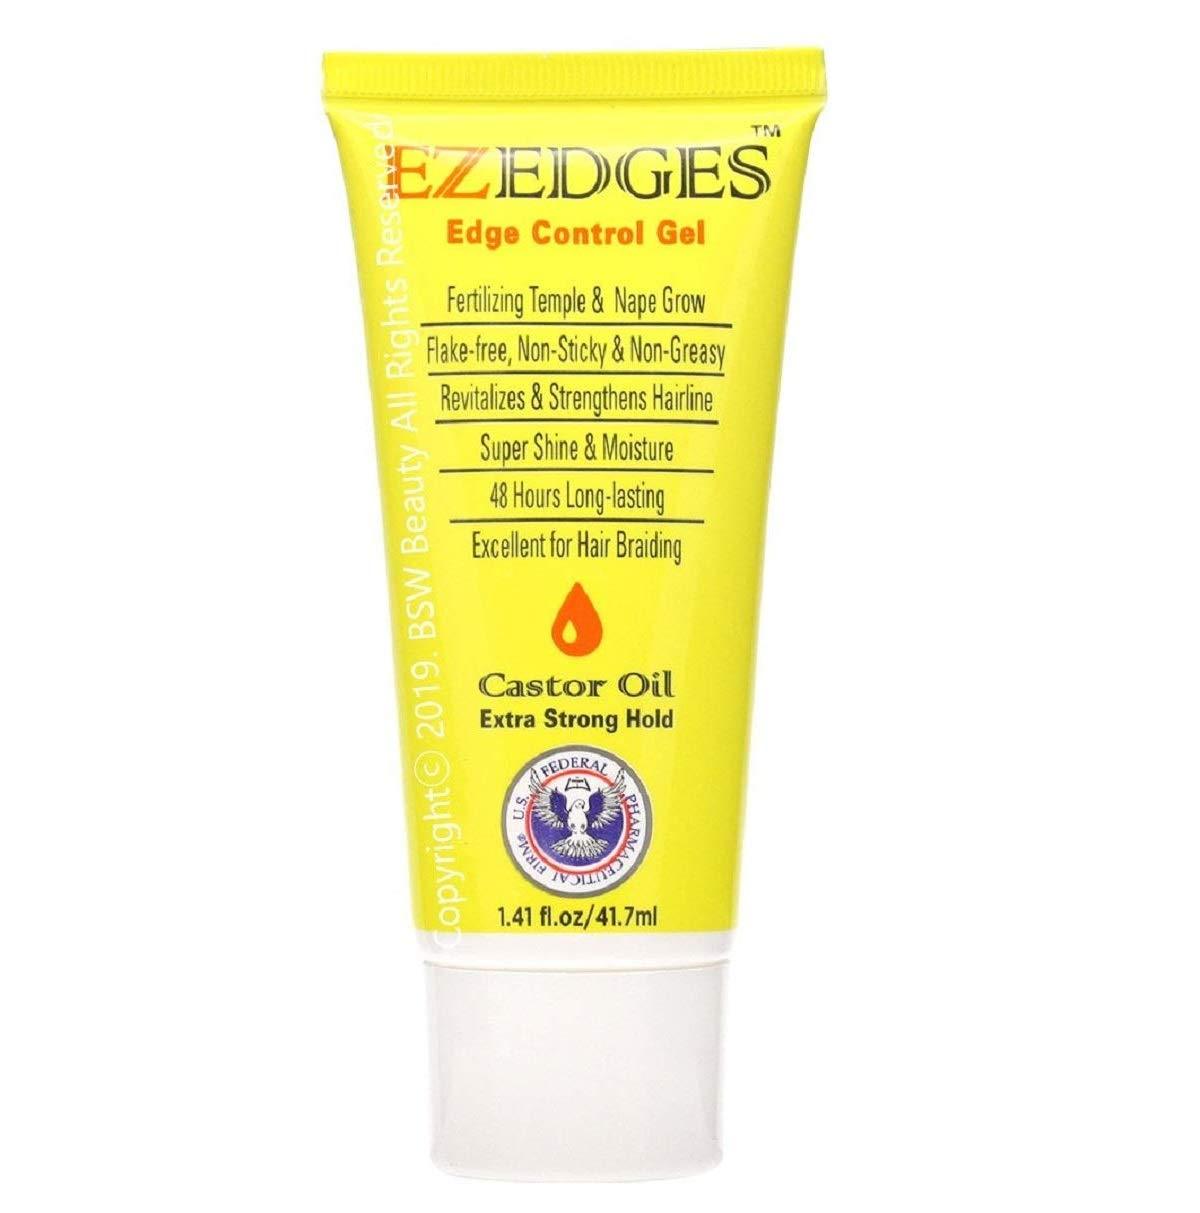 EZEDGES Edge Control Gel Castor Oil Tube 1.41oz (PC)